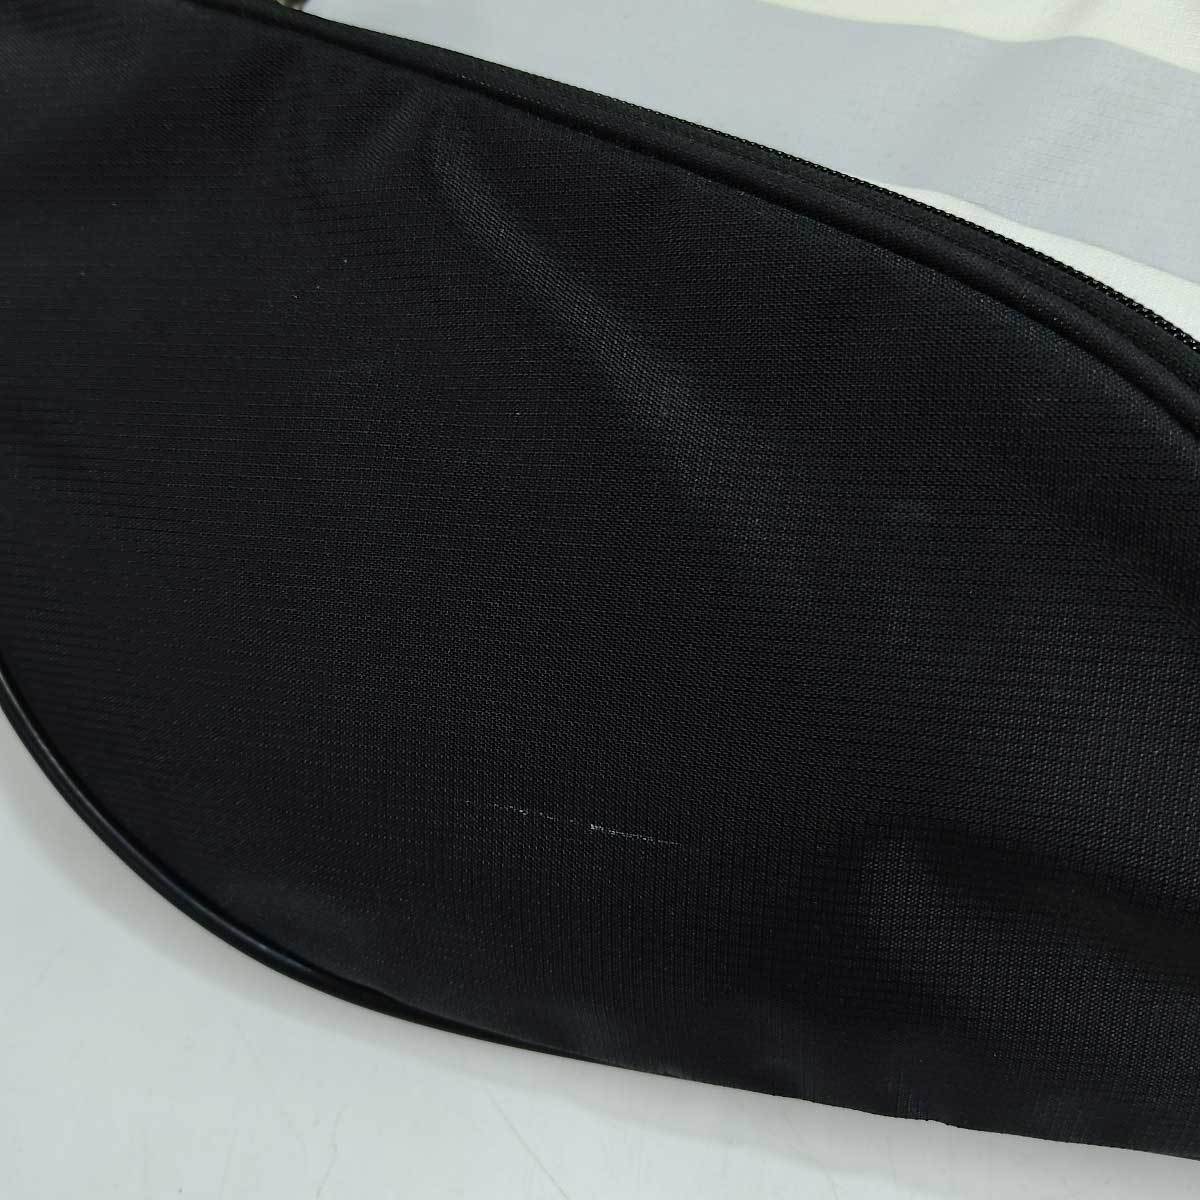 [ used ] Yonex case racket bag 6 rucksack attaching tennis 6ps.@ for white x black BAG1932R unisex YONEX badminton 